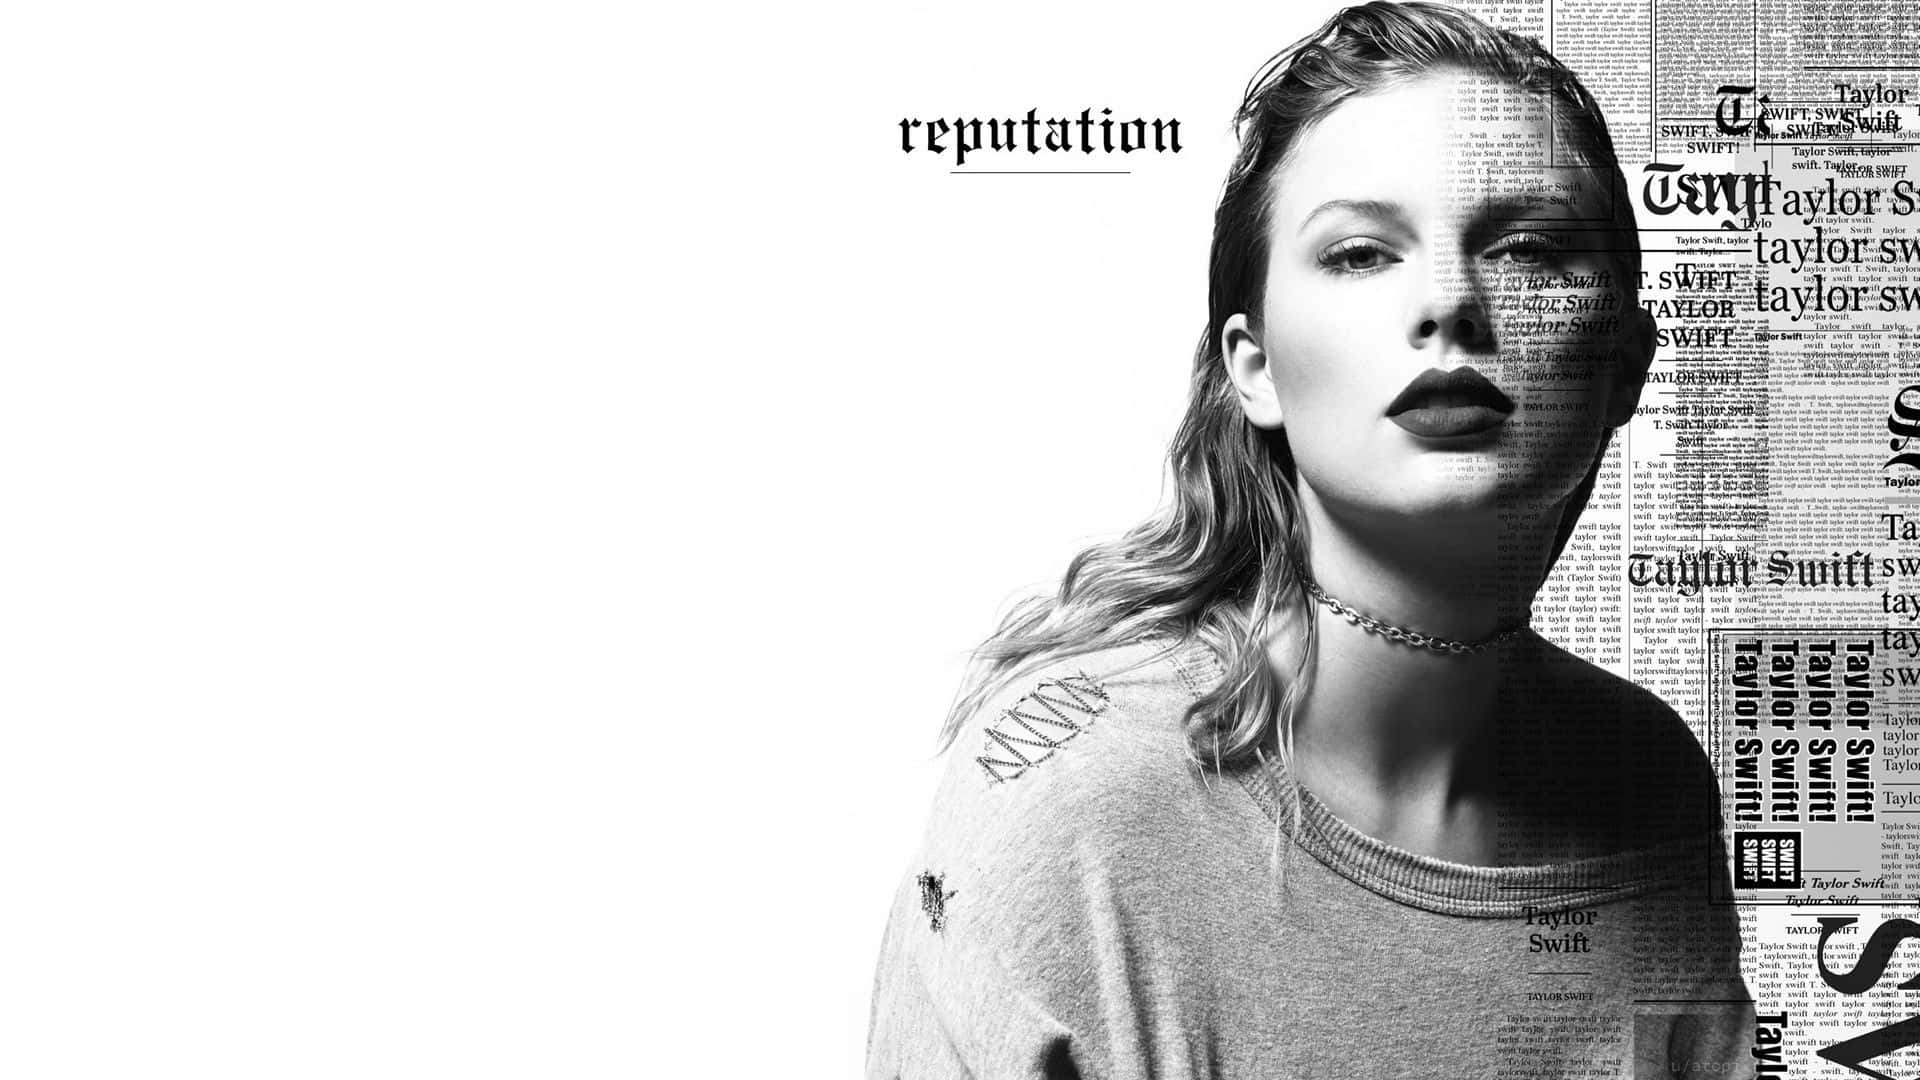 Hintergrunddes Taylor Swift Reputation Album Covers